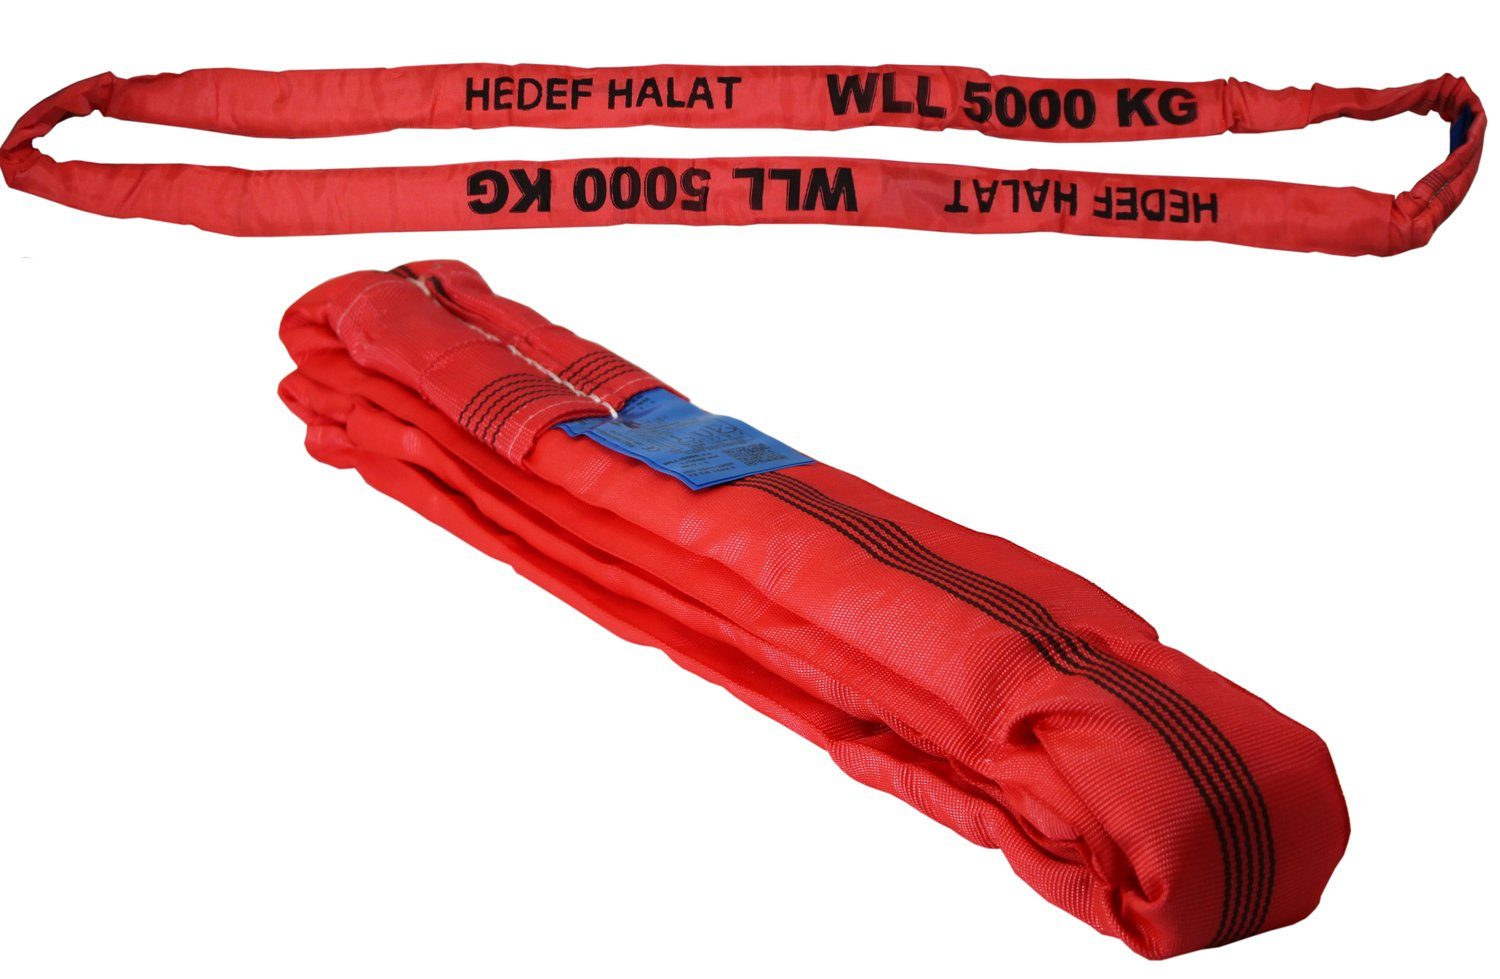 HEDEF HALAT Rundschlinge mit Einfachmantel 5 Tonnen 5 Meter SF: 7/1 DIN EN 1492-2 Hebeband, Rundschlingen Bandschlinge Hebegurt 5 m (umfang 10 m)